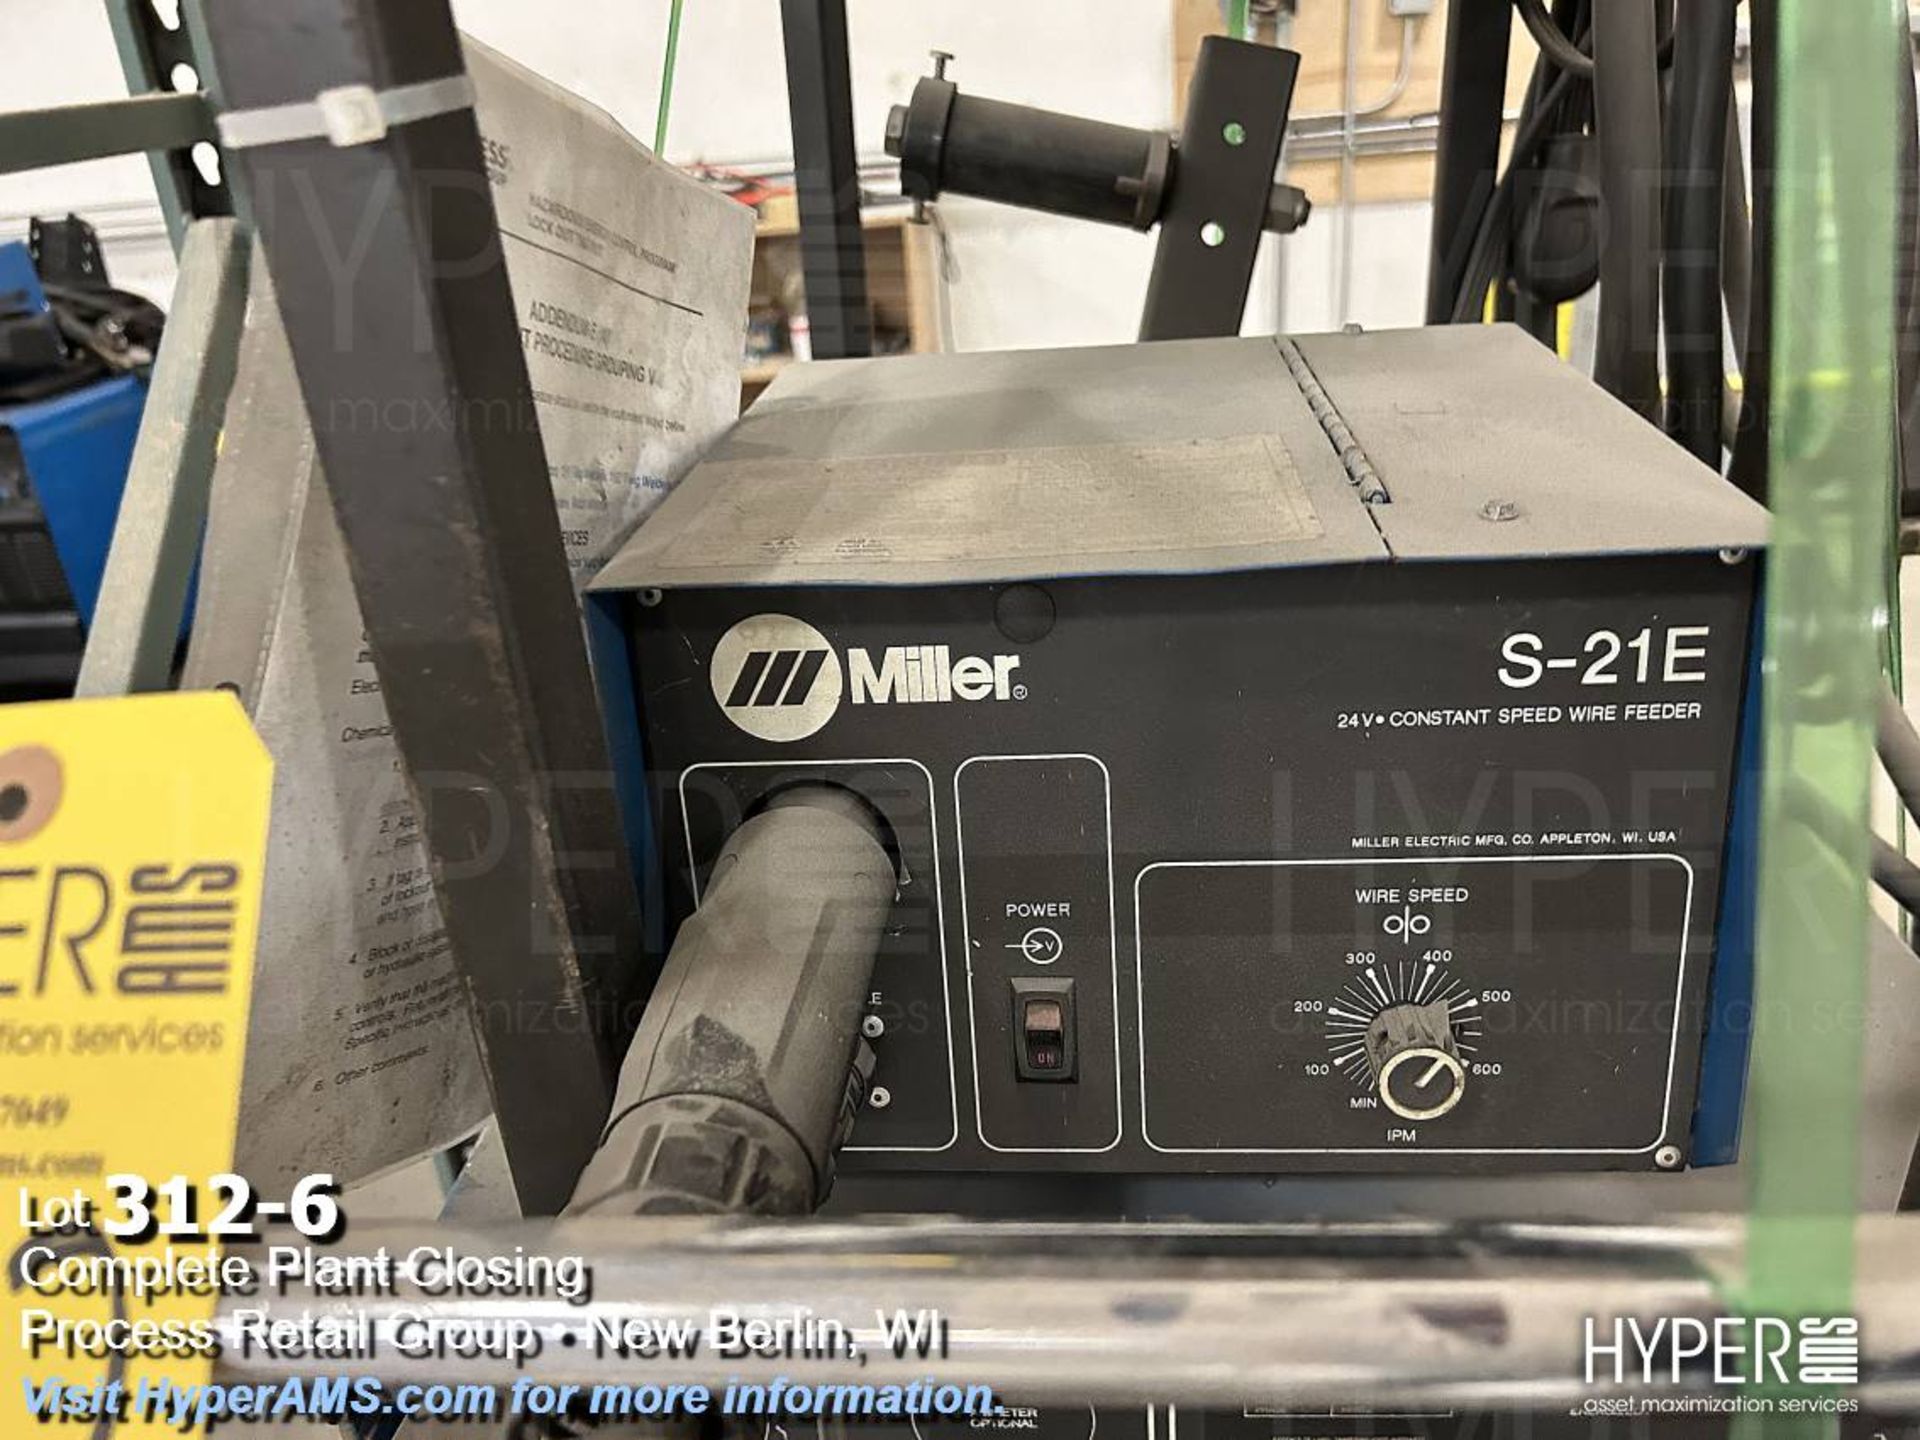 Miller Shopmaster 300 AC/DC welder CC/CV.AC arc welding power source - Image 6 of 7